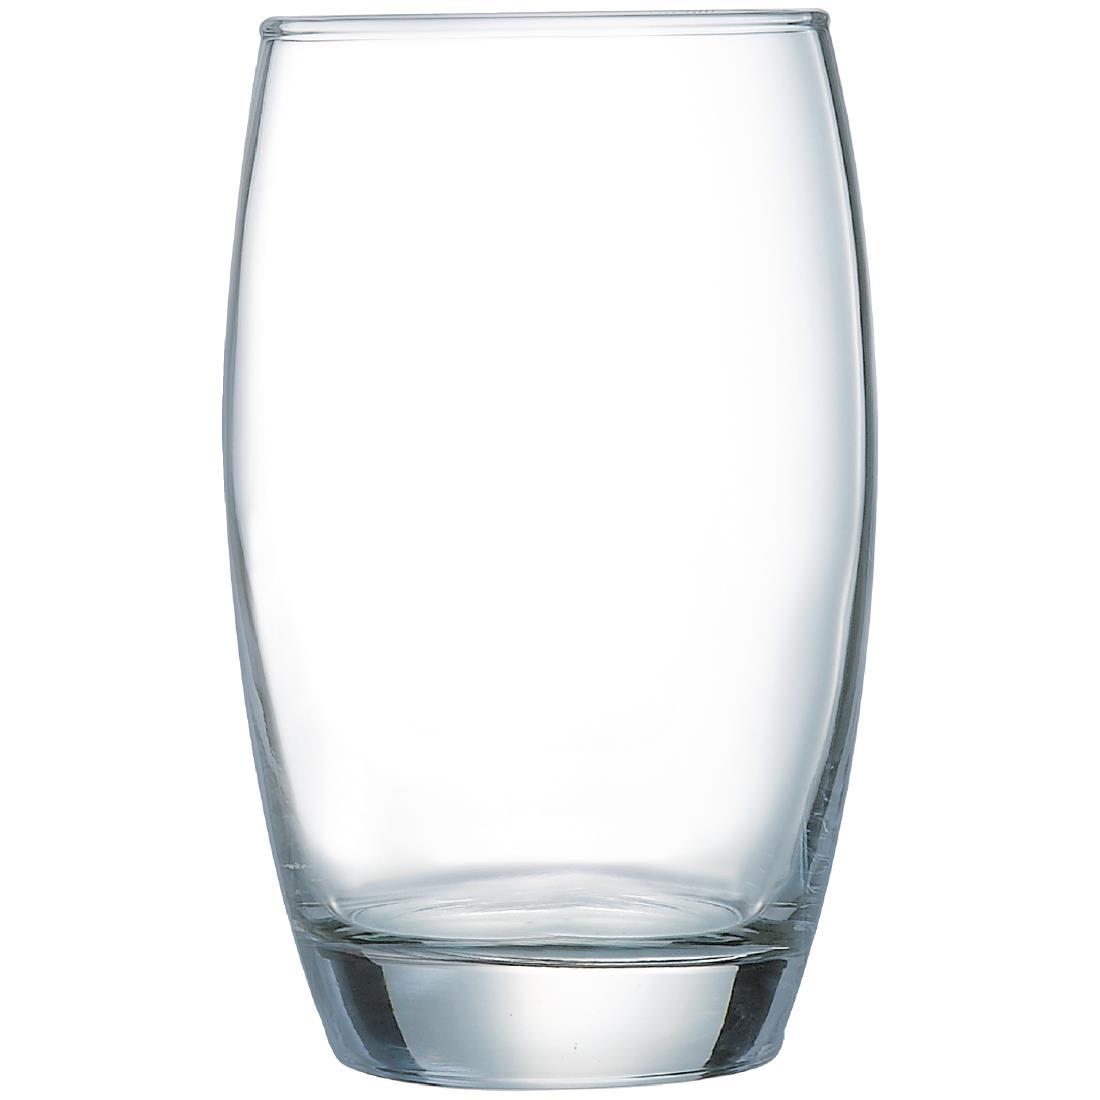 Arcoroc Salto Hi Ball Glasses 350ml (Pack of 6) - DP059  - 1